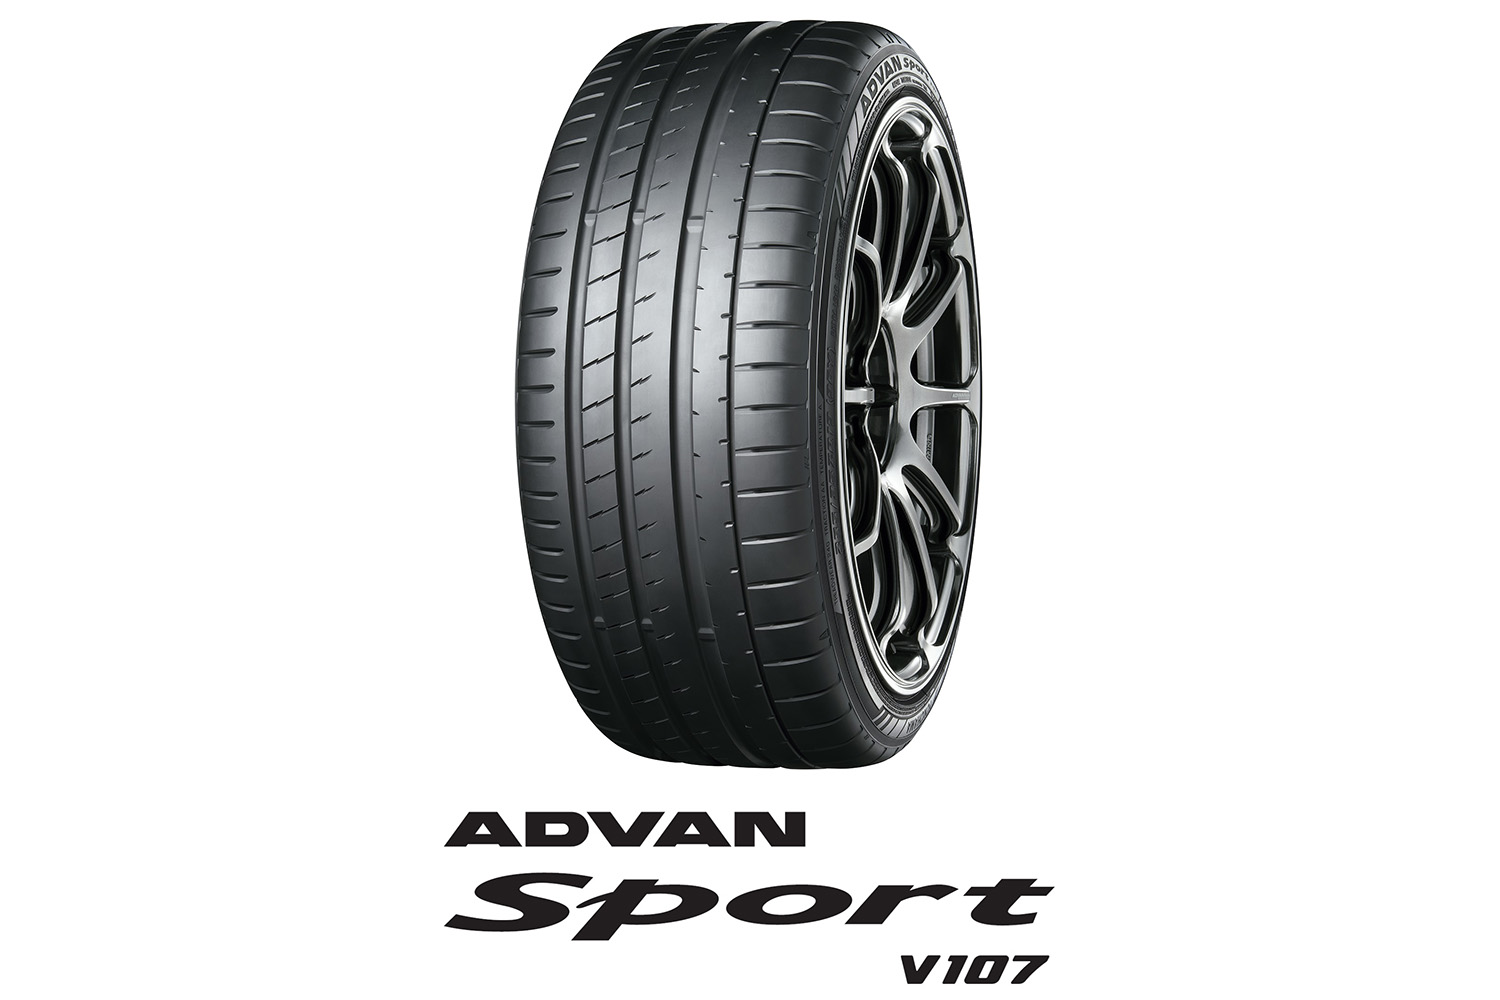 「ADVAN Sport V107」の全体画像 〜 画像1